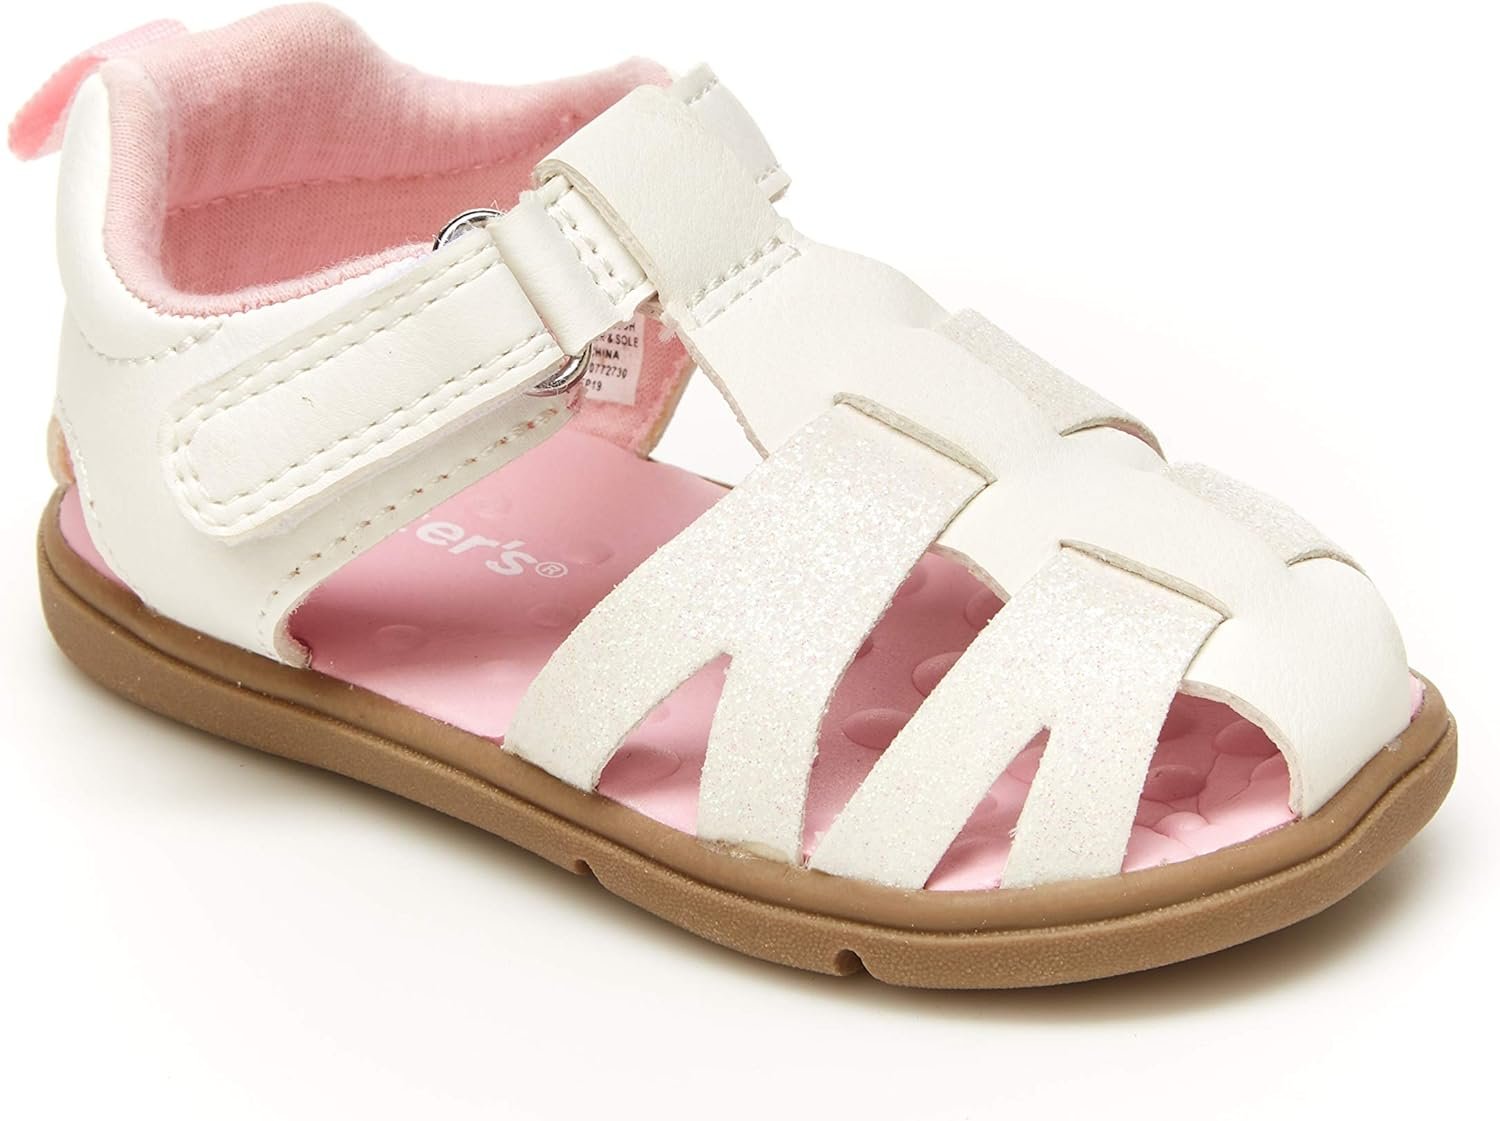 Carters Baby-Girls Adalyn First Walker Shoe